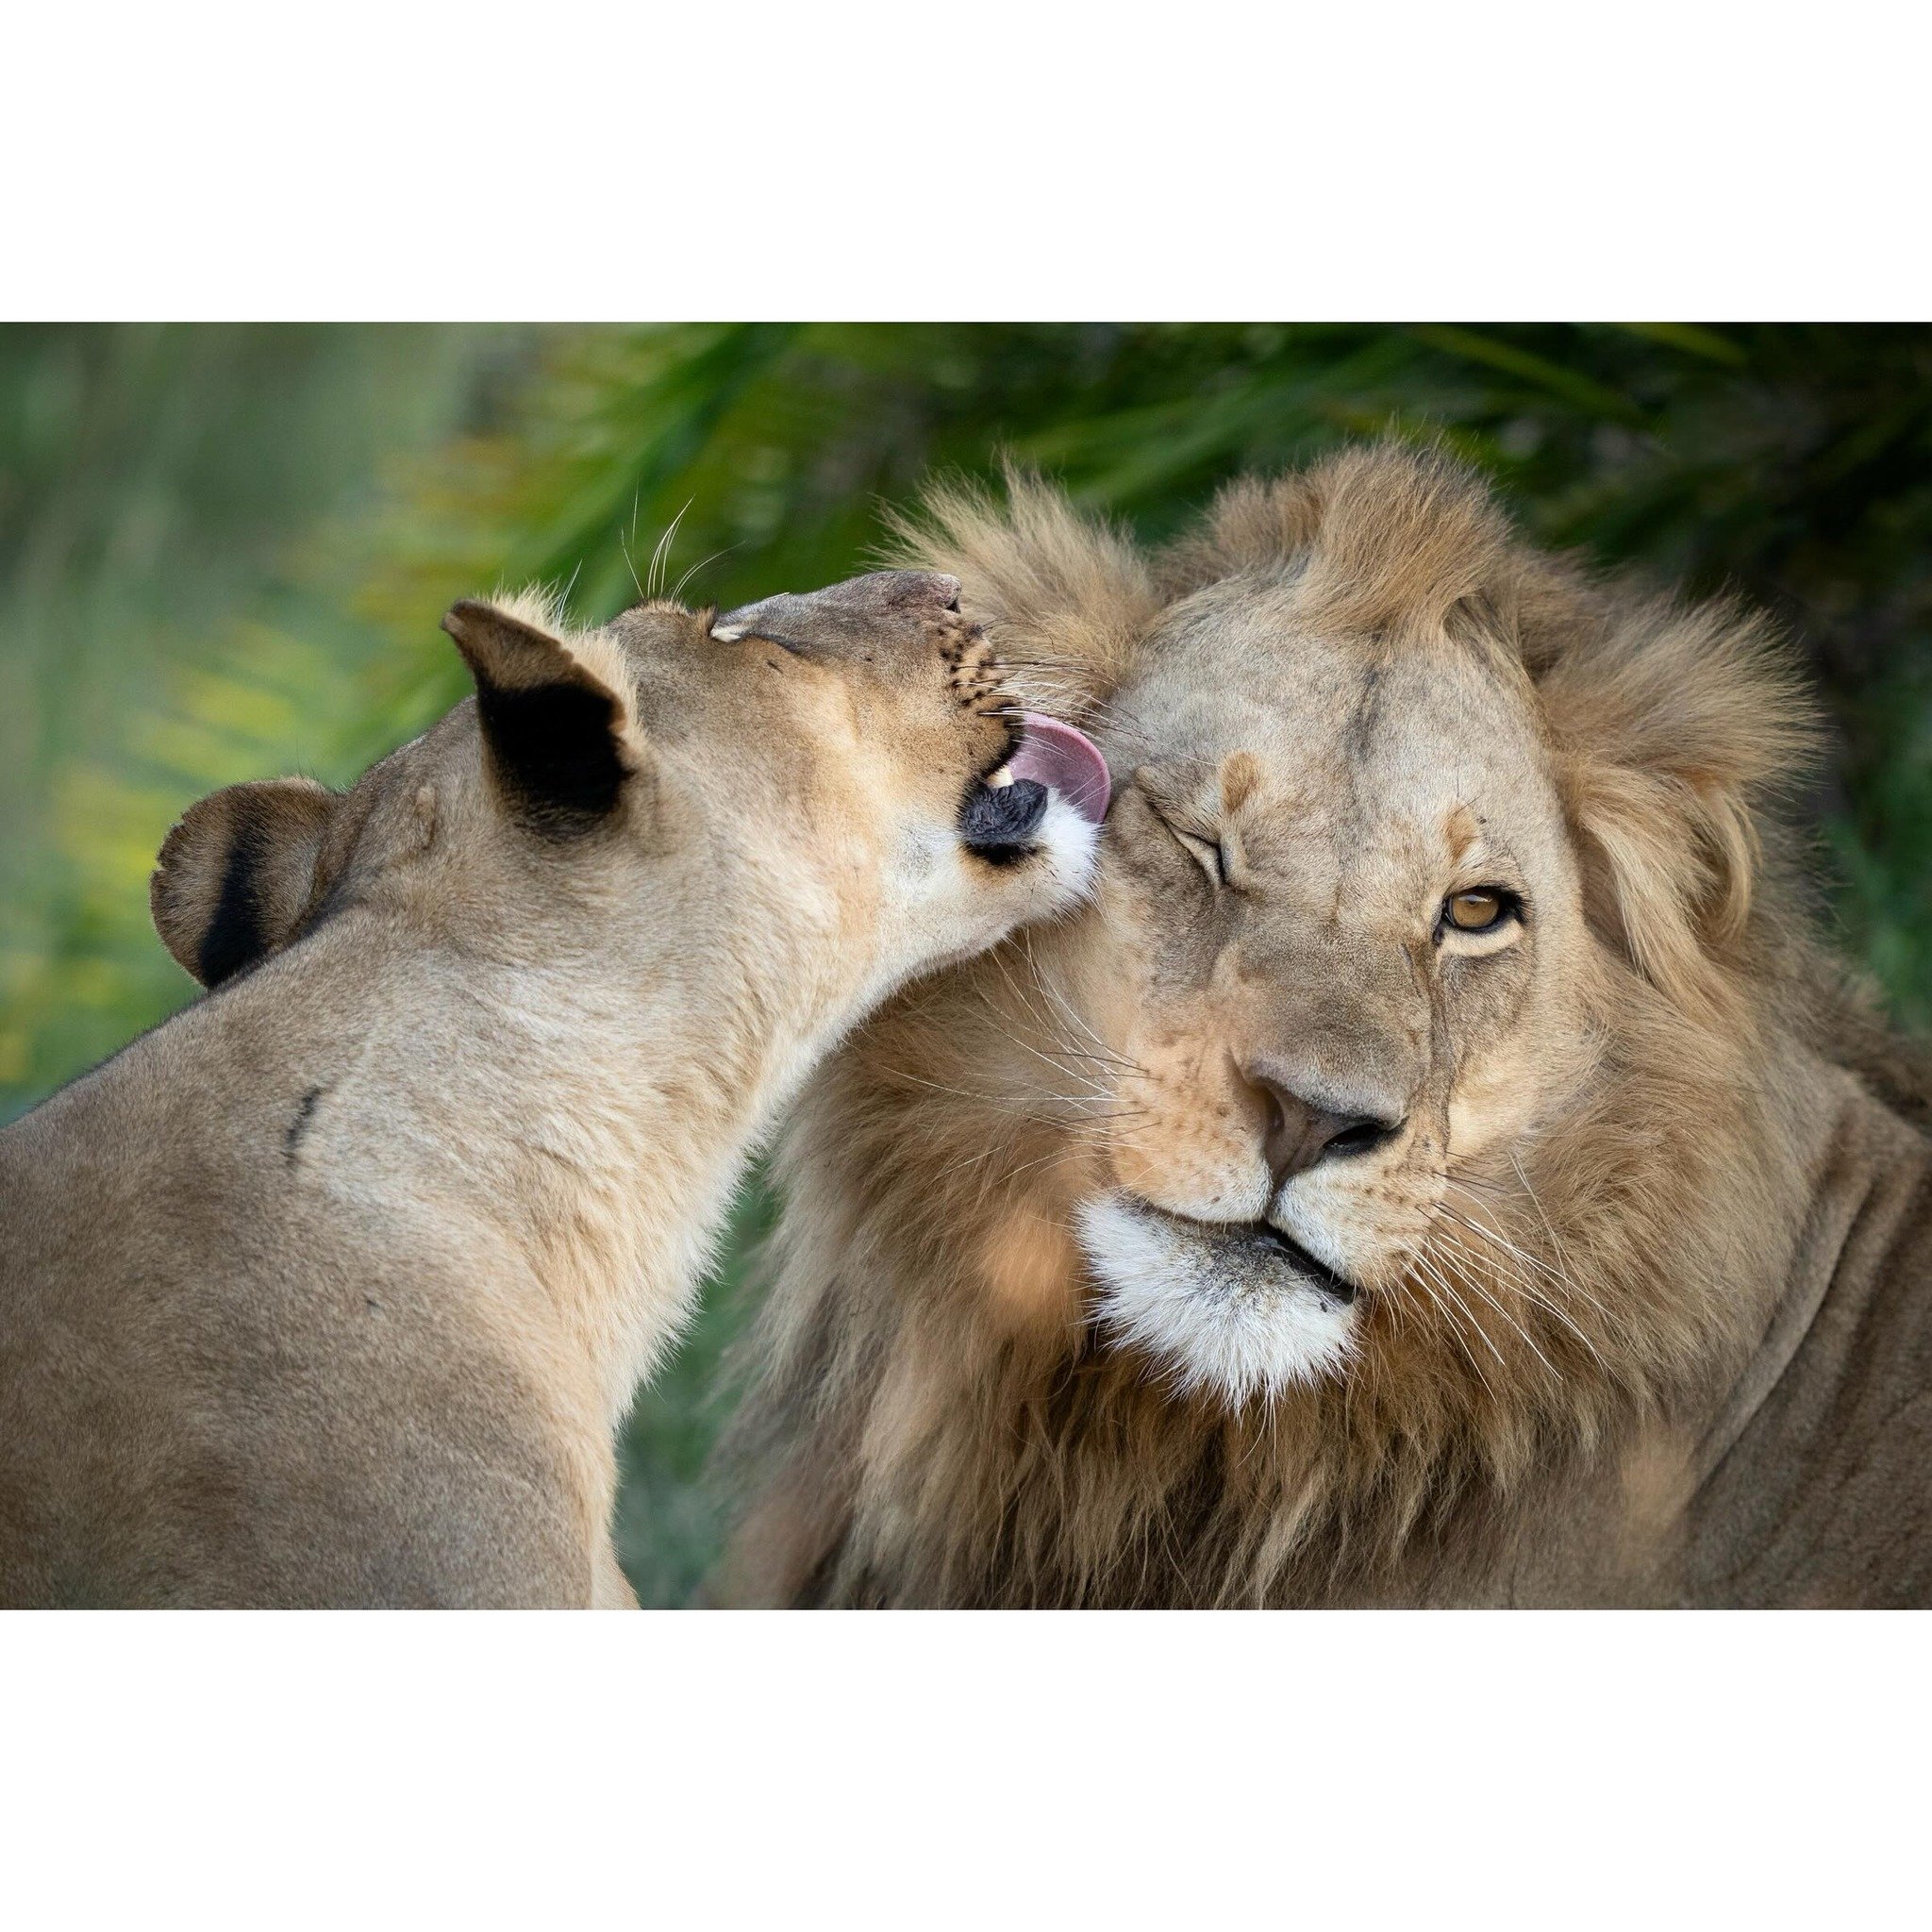 Facewash.

#lions #lionsofinstagram #bigcat #bigcatsofinstagram #pantheraleo #panthera #wildlife #wildlifephotography #africawildlife #okavangodelta #botswana #bbcearth #yourshotphotographer @sonyalphafemale @jaoreserve @jaocampbotswana